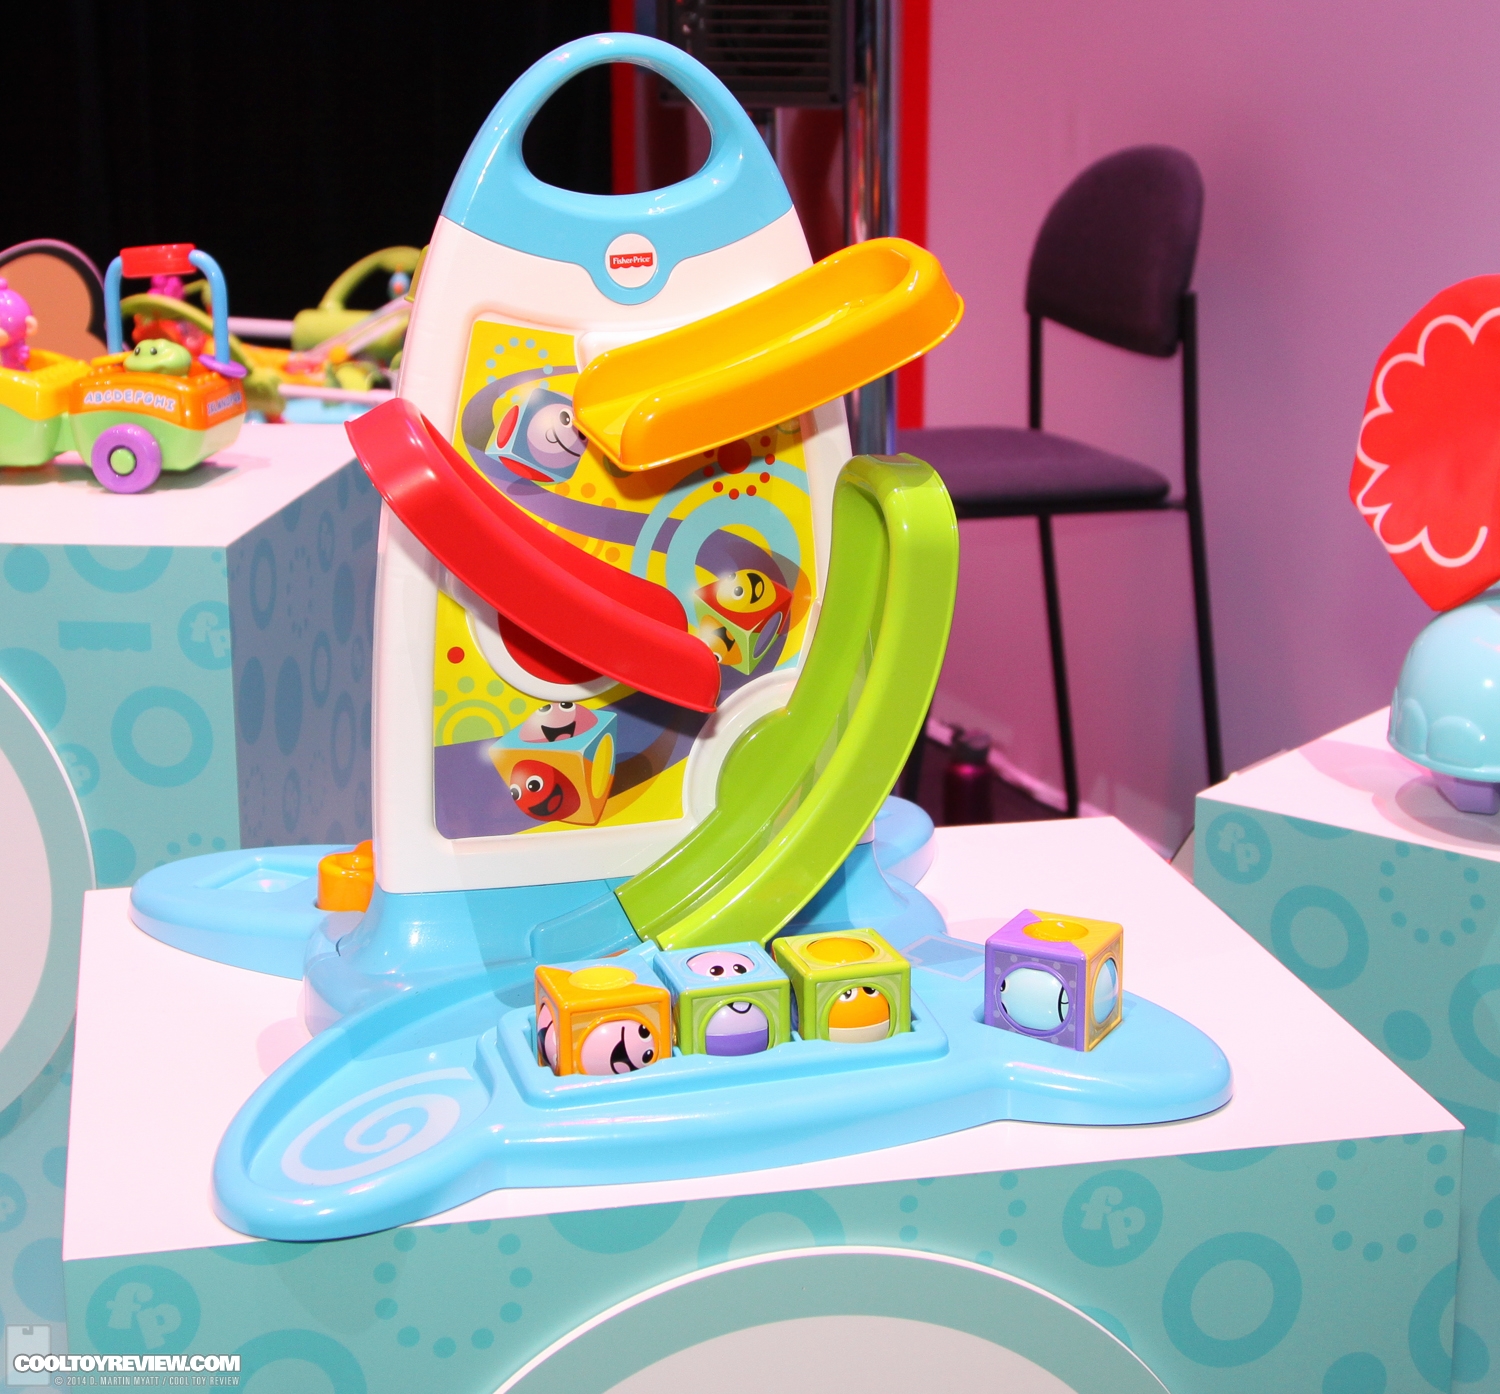 Toy-Fair-2014-Mattel-Showroom-033.jpg